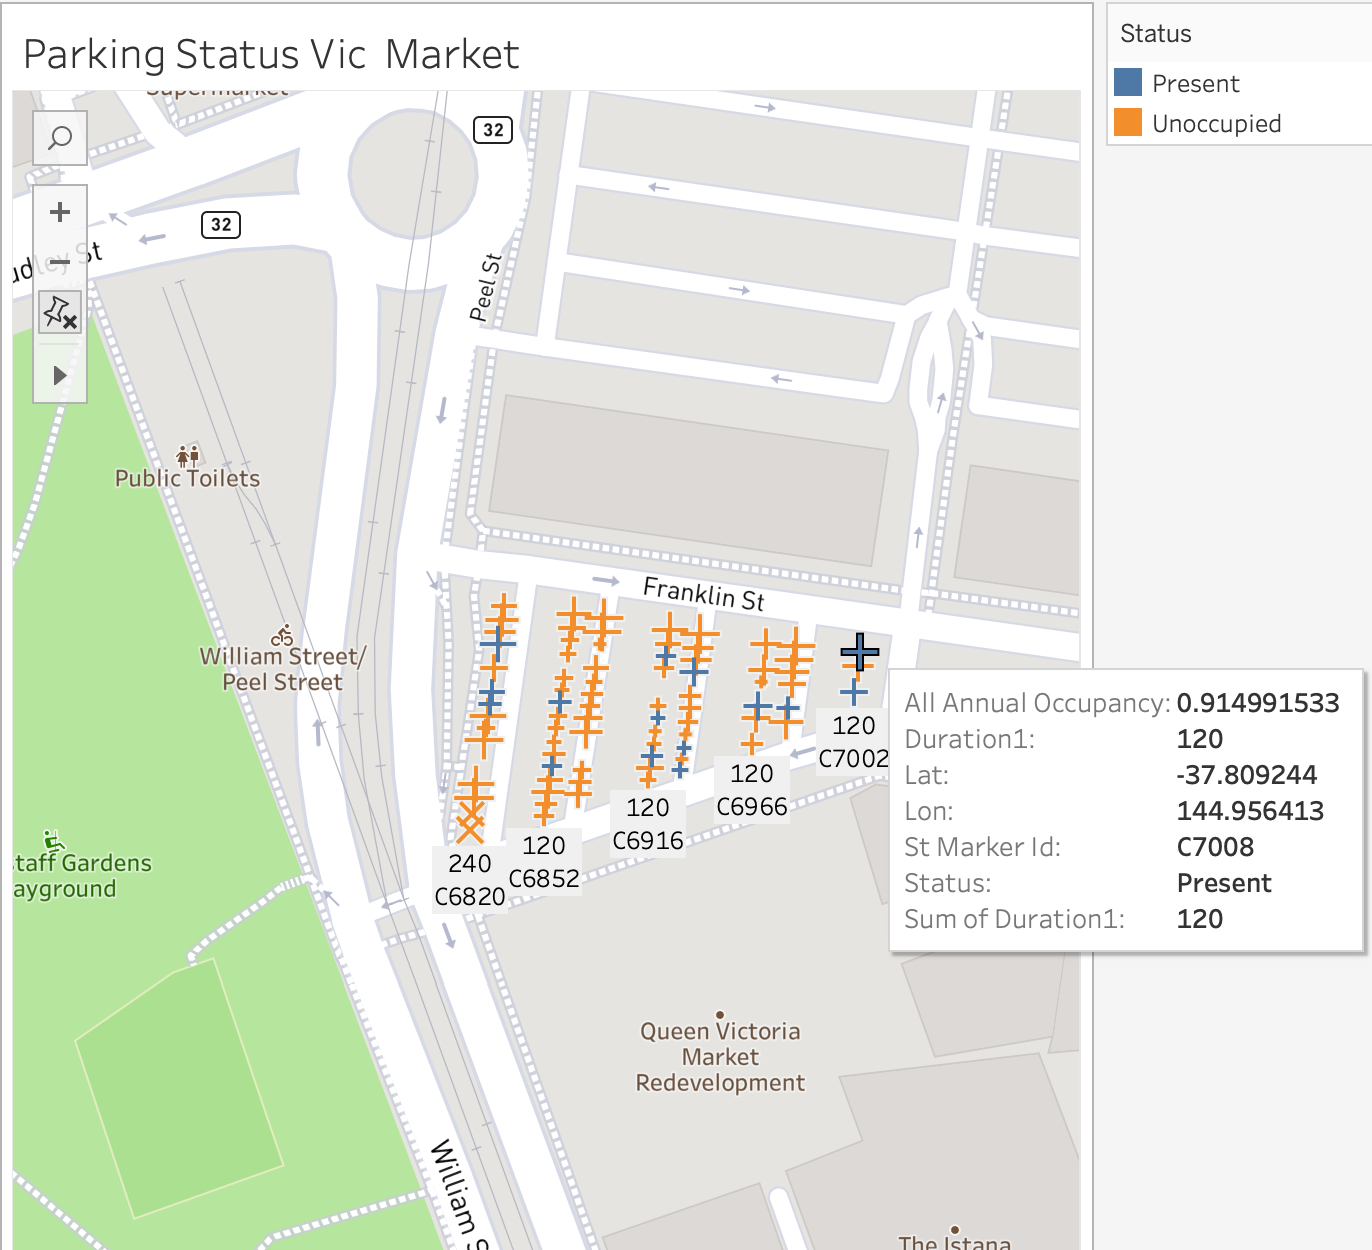 Tableau chart showing parking bay occupancy near Victoria Market in Melbourne Australia